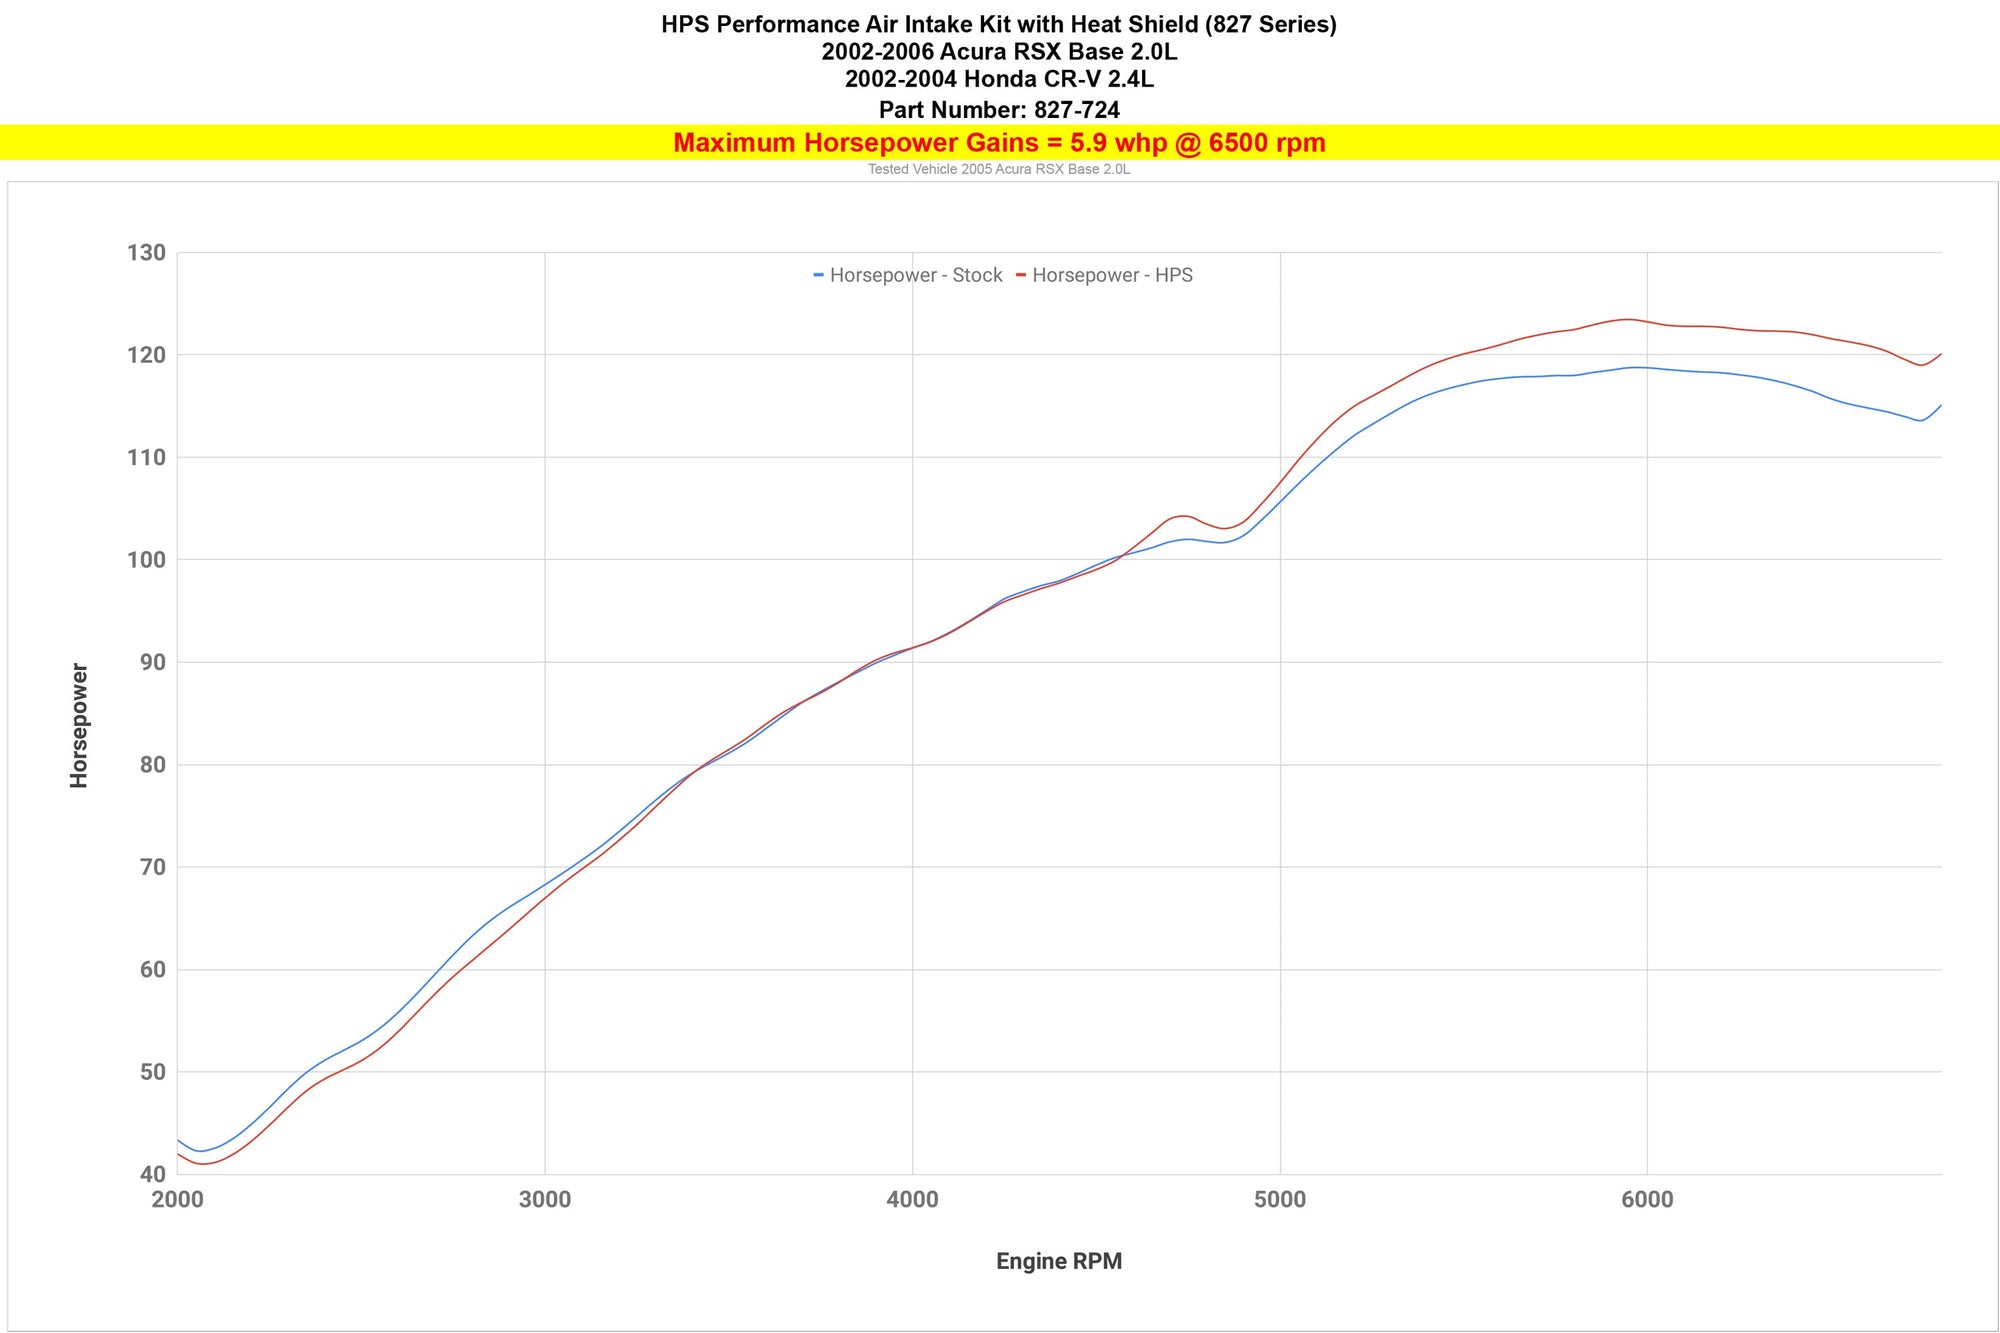 HPS Shortram Air Intake Kit increase horsepower 5.9 whp gains 2002-2004 Honda CR-V 2.4L 827-724